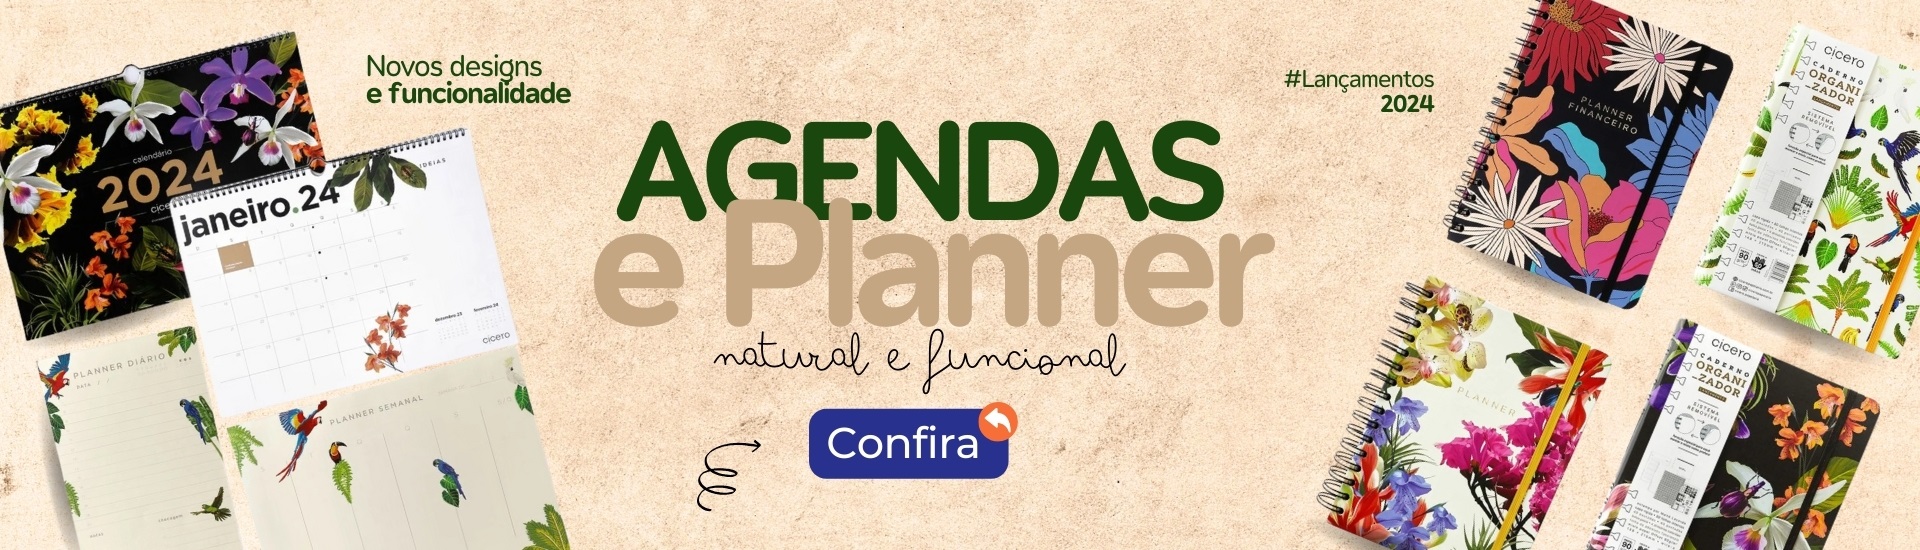 agenda e planner PRIMEIRO